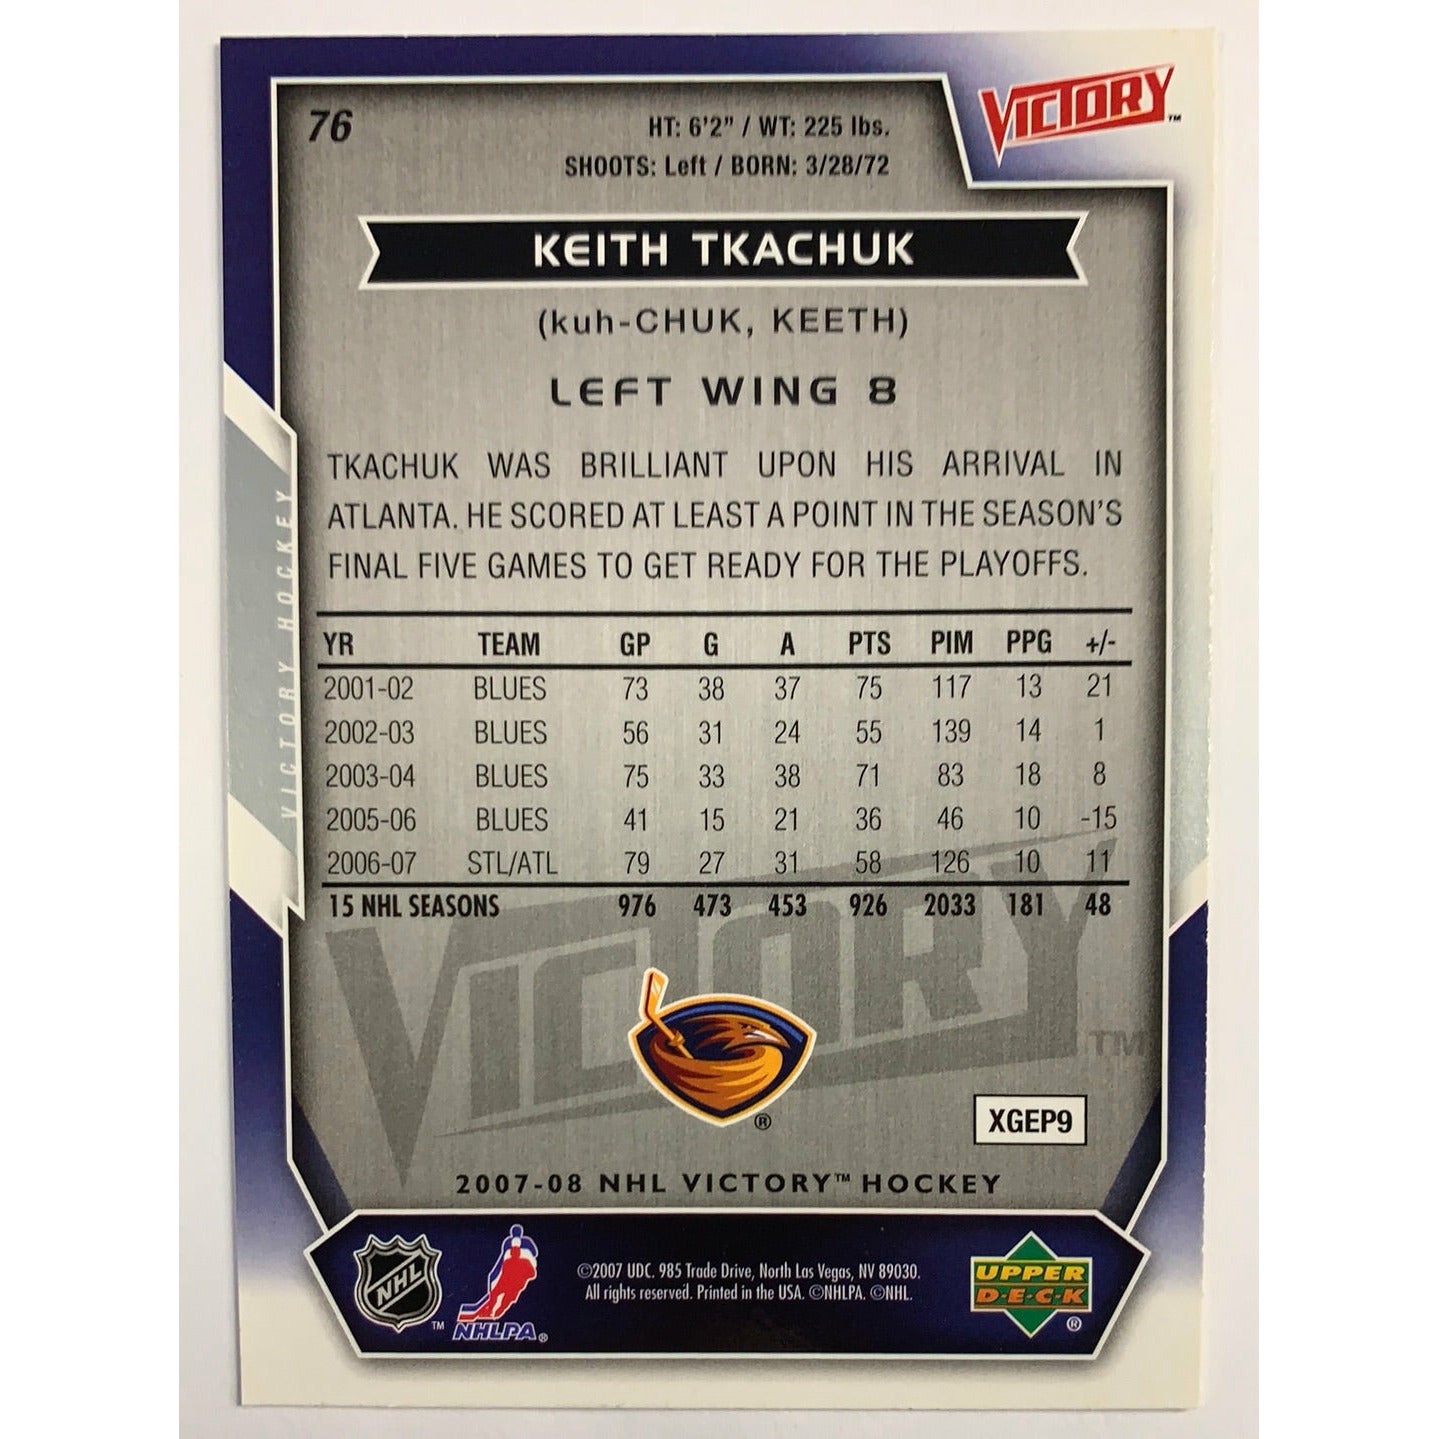 2007-08 Victory Keith Tkachuk